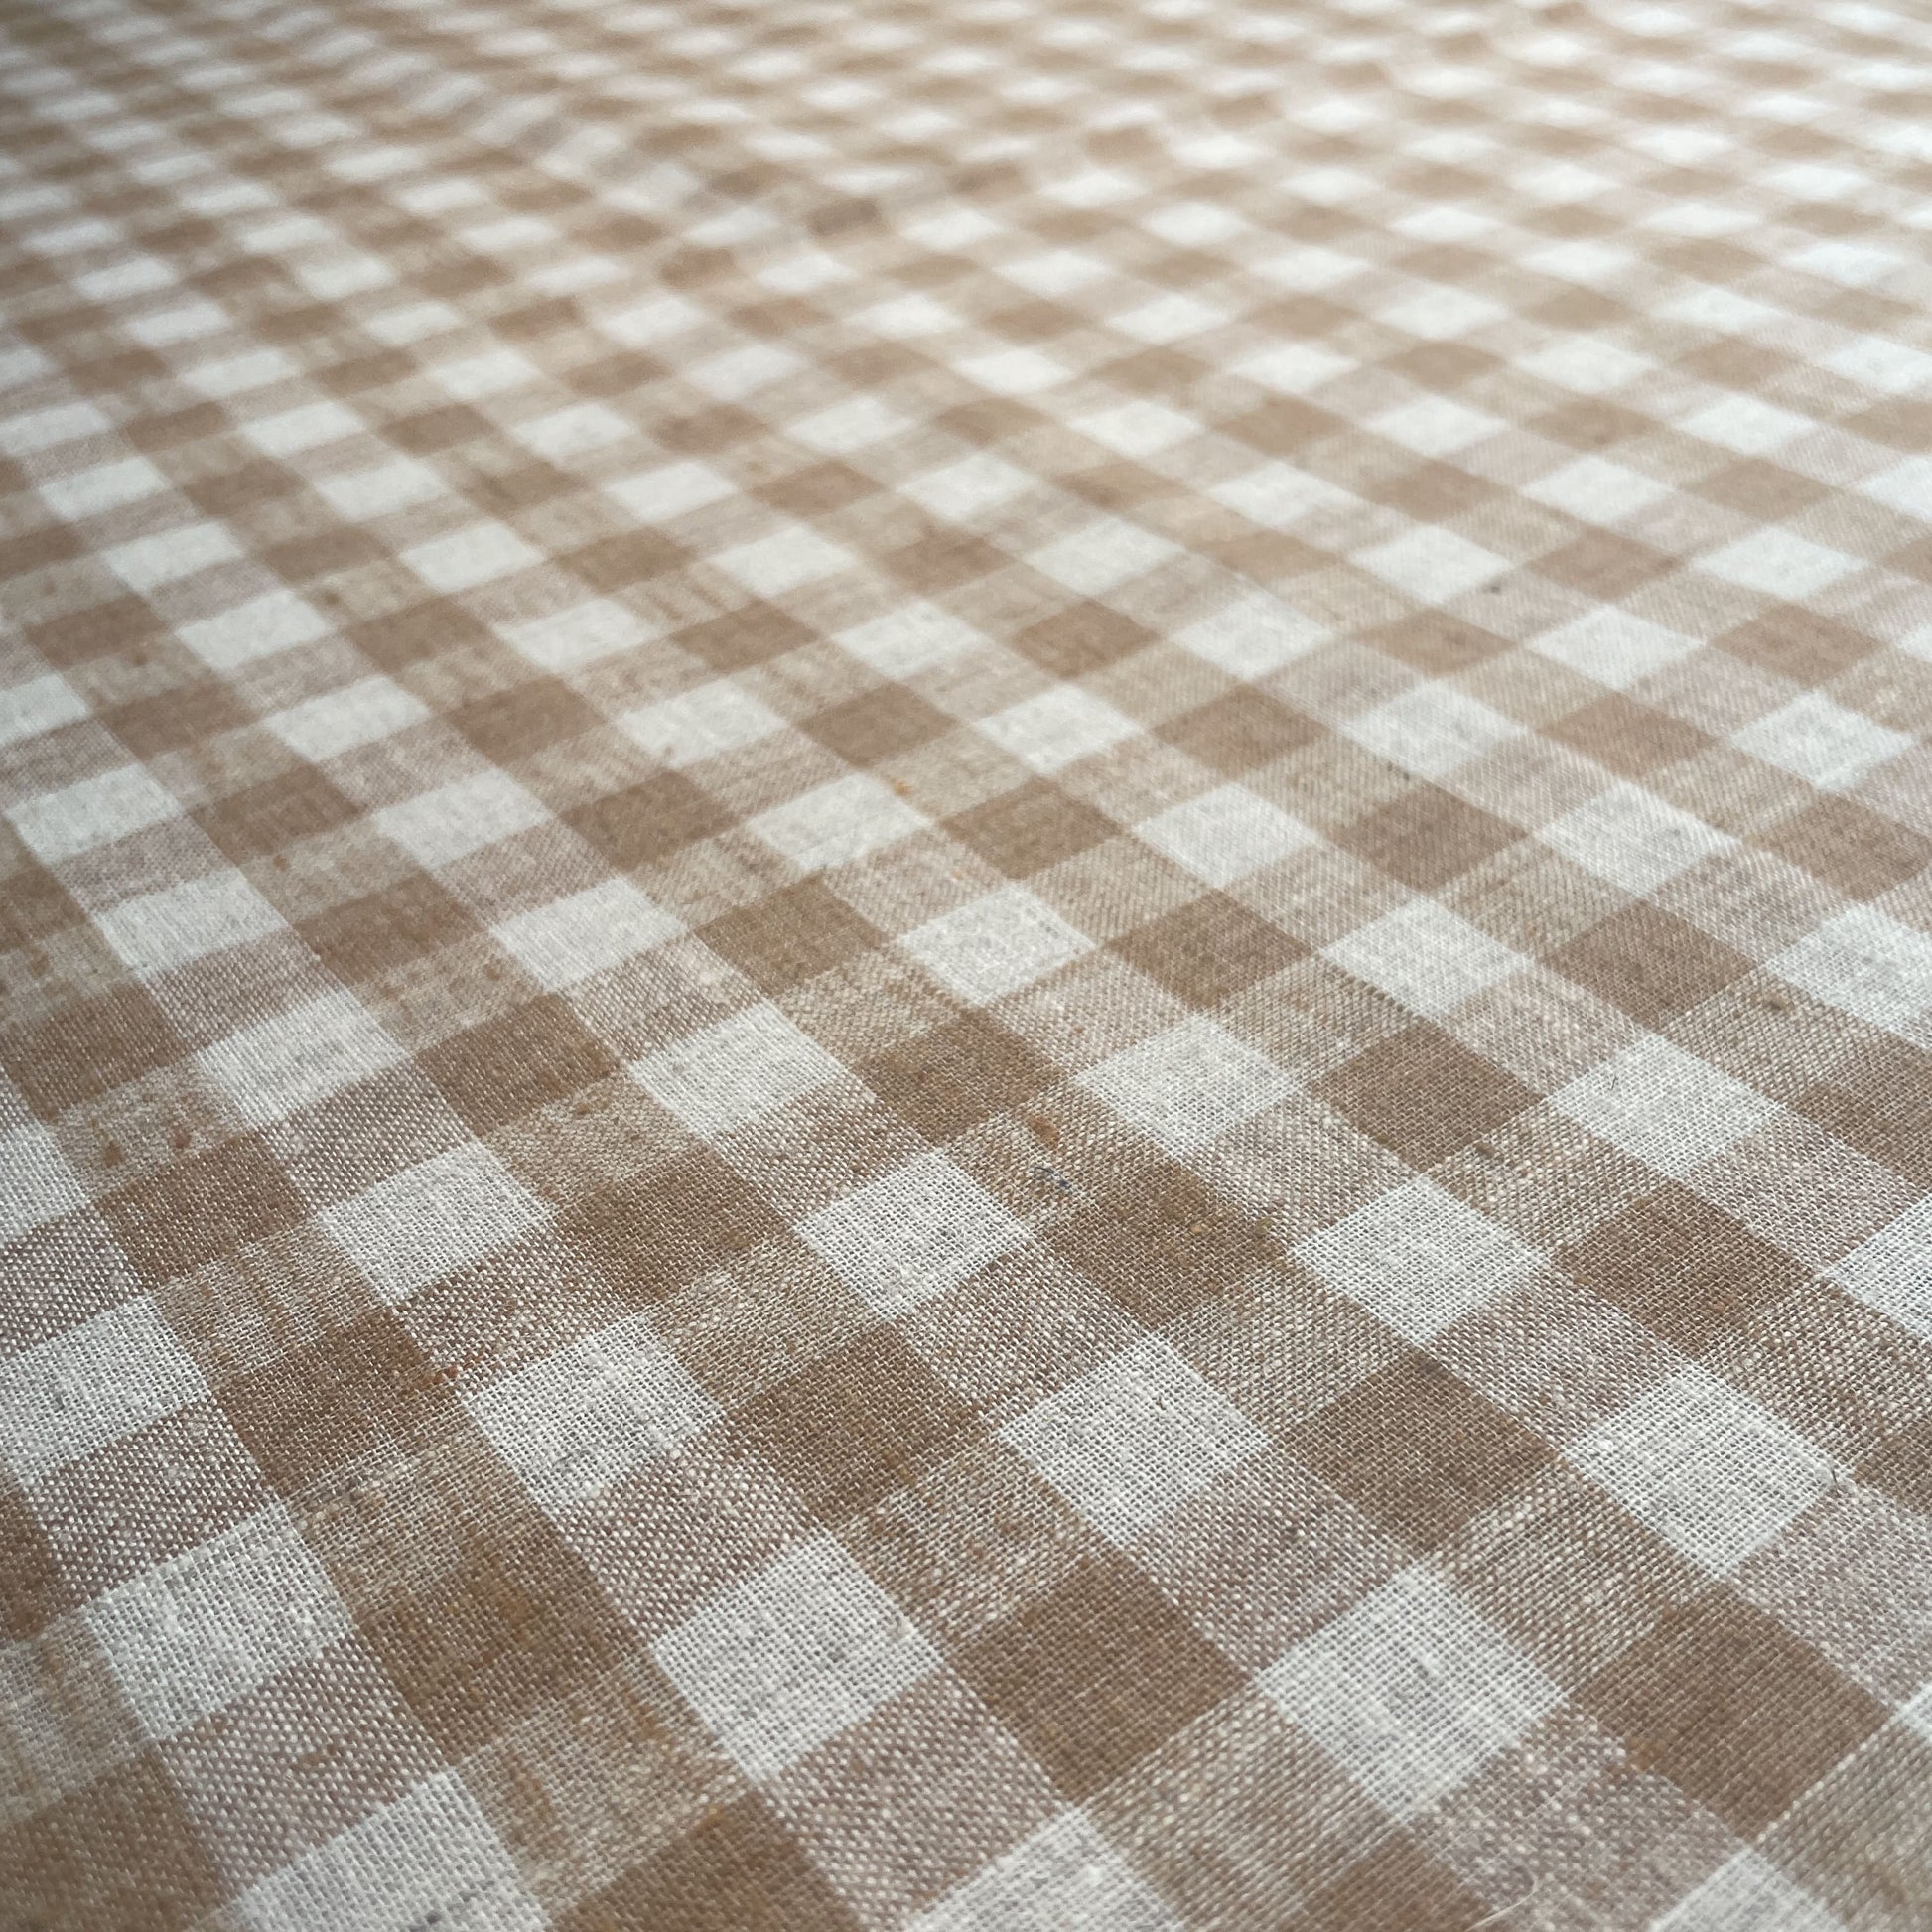 Premium Brown & Beige Checks Print Linen Fabric